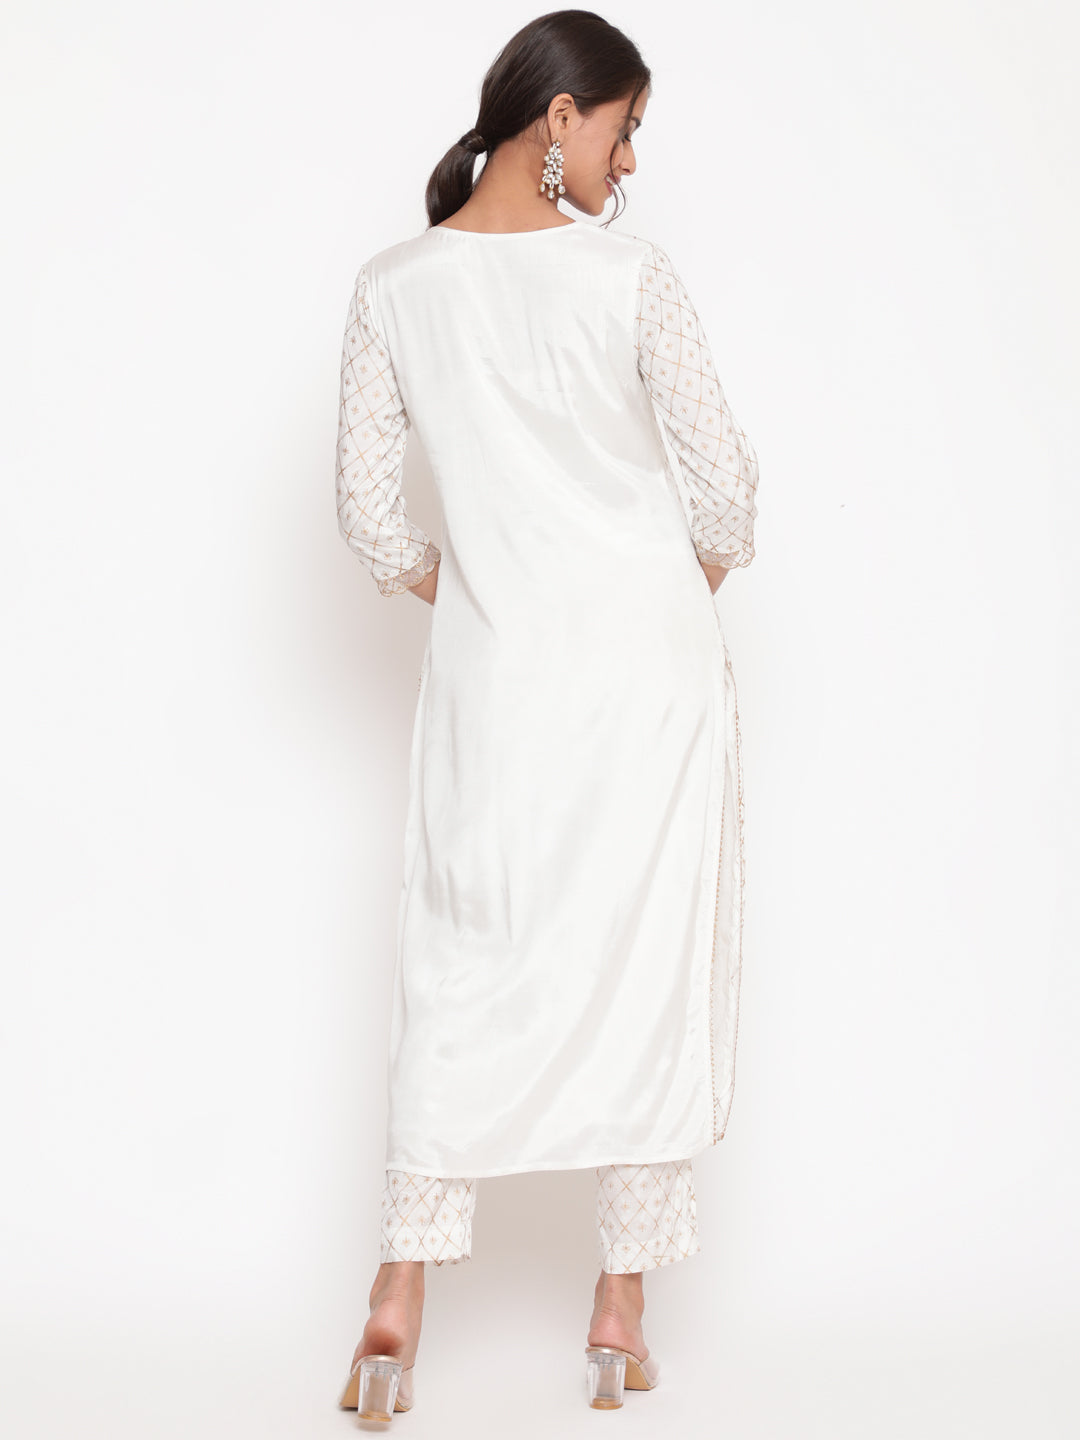 Woman posing in Savi’s Shantoon Printed and Embroidered Off White Kurta Pant Set